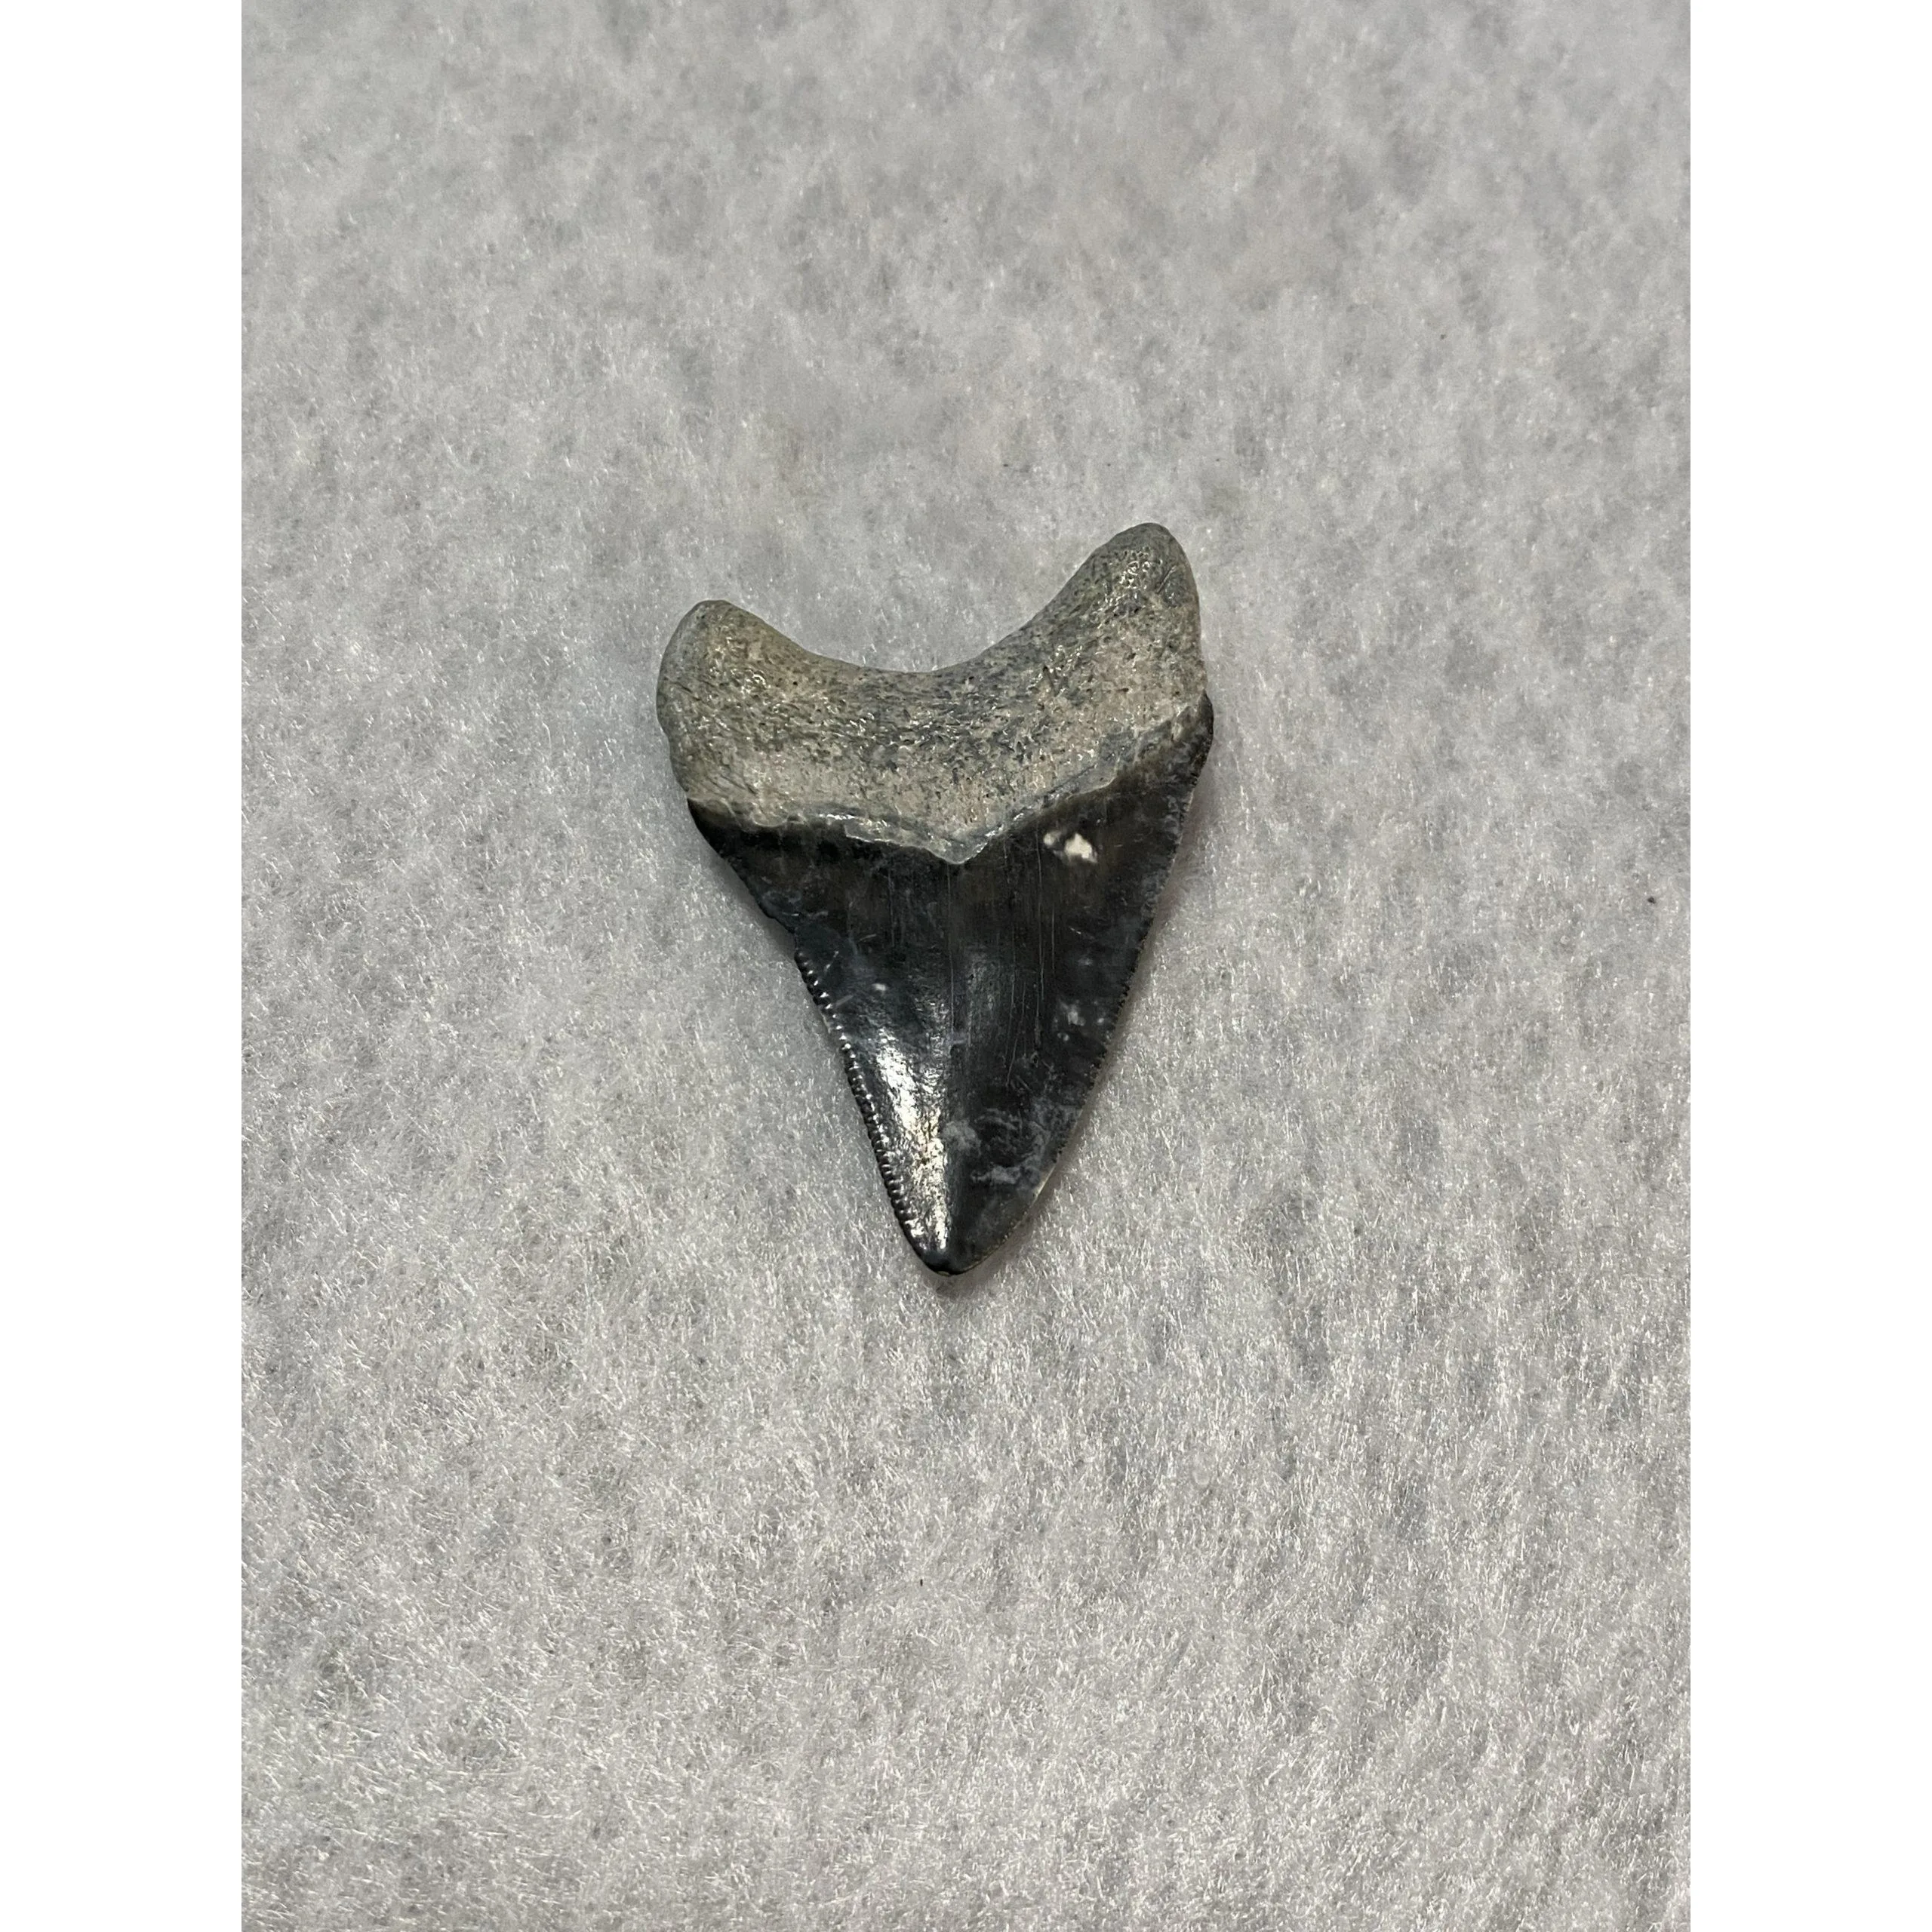 Megalodon Tooth  Bone Valley, Florida 2.16 inch Prehistoric Online